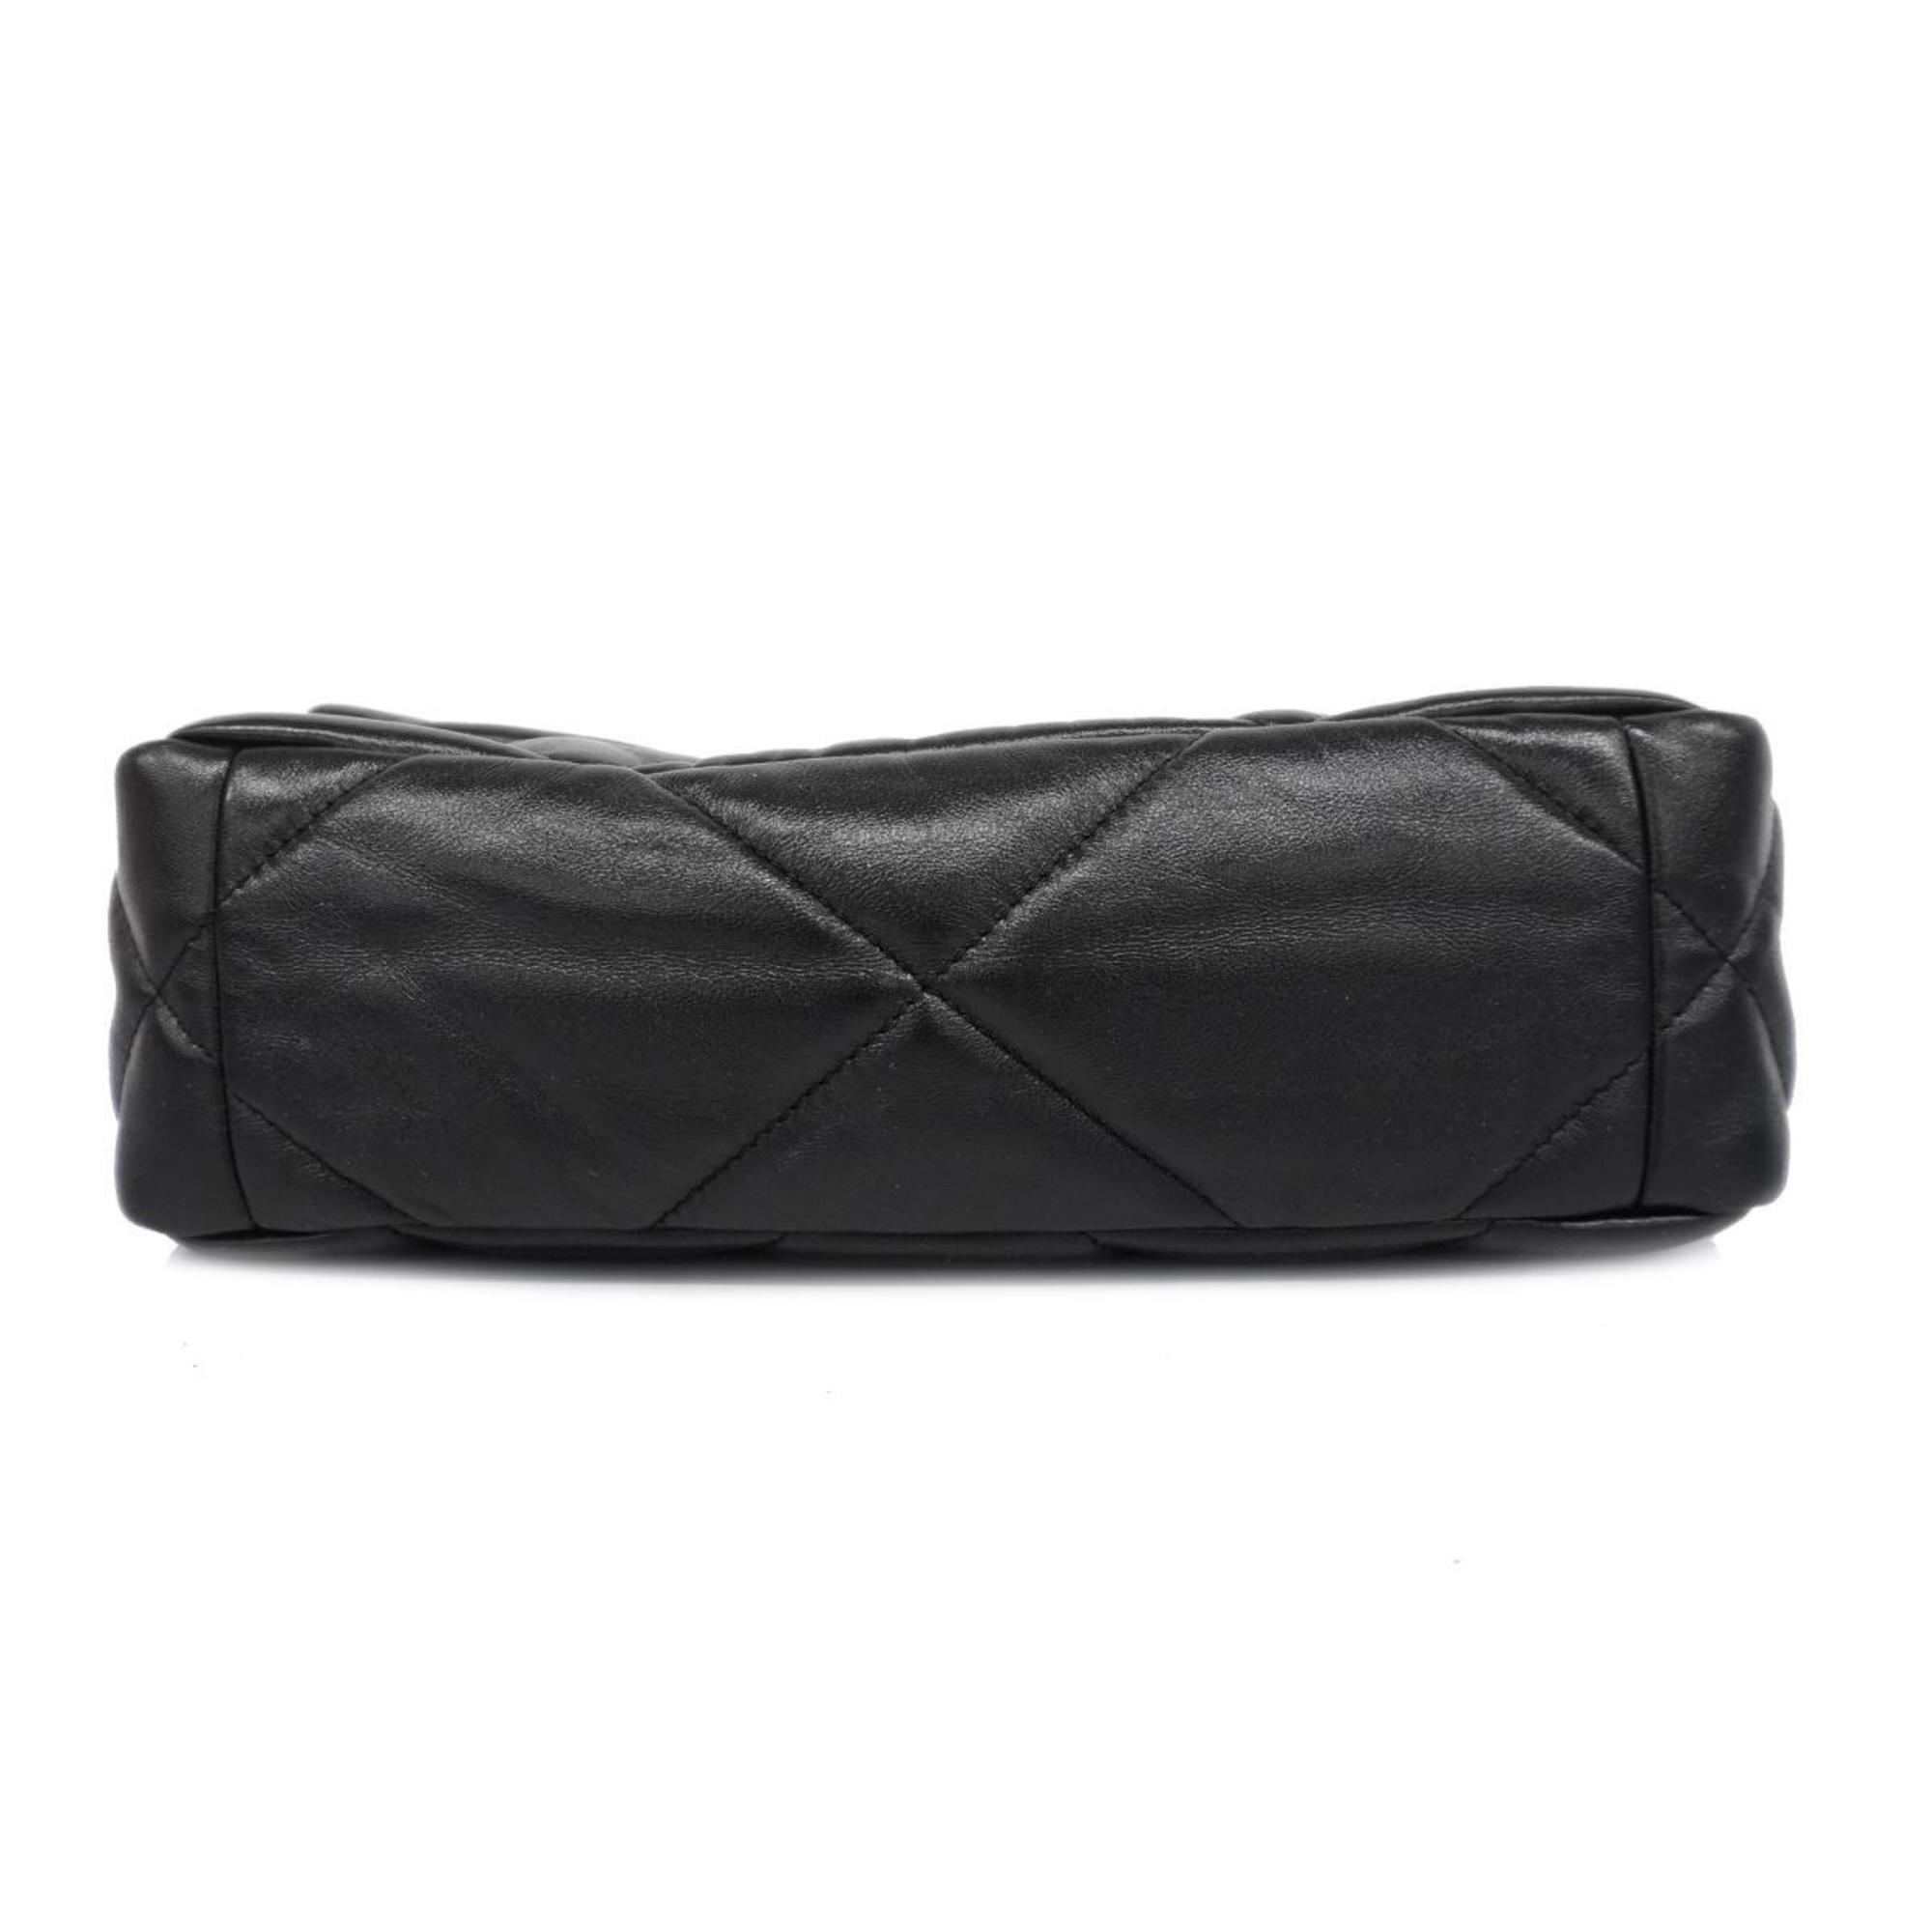 Chanel Handbag 19 Chain Shoulder Lambskin Black Women's